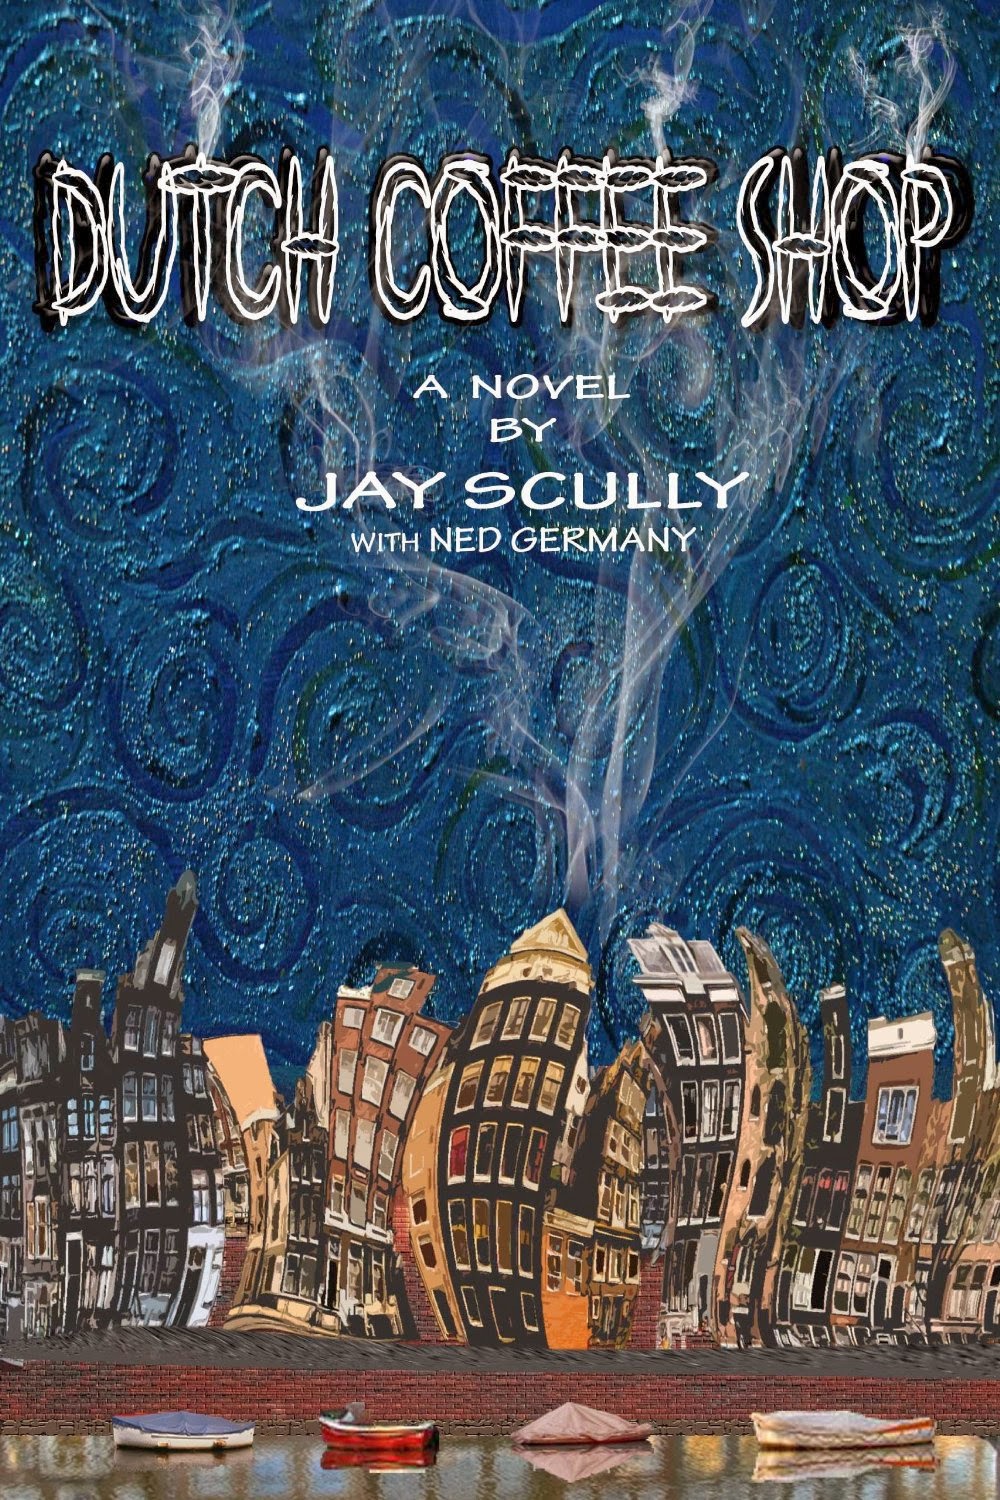 http://www.amazon.com/Dutch-Coffee-Shop-Jay-Scully-ebook/dp/B00GMAYP5I/ref=sr_1_fkmr0_1?s=books&ie=UTF8&qid=1395494783&sr=1-1-fkmr0&keywords=the+dutch+coffee+shop+jay+sculley